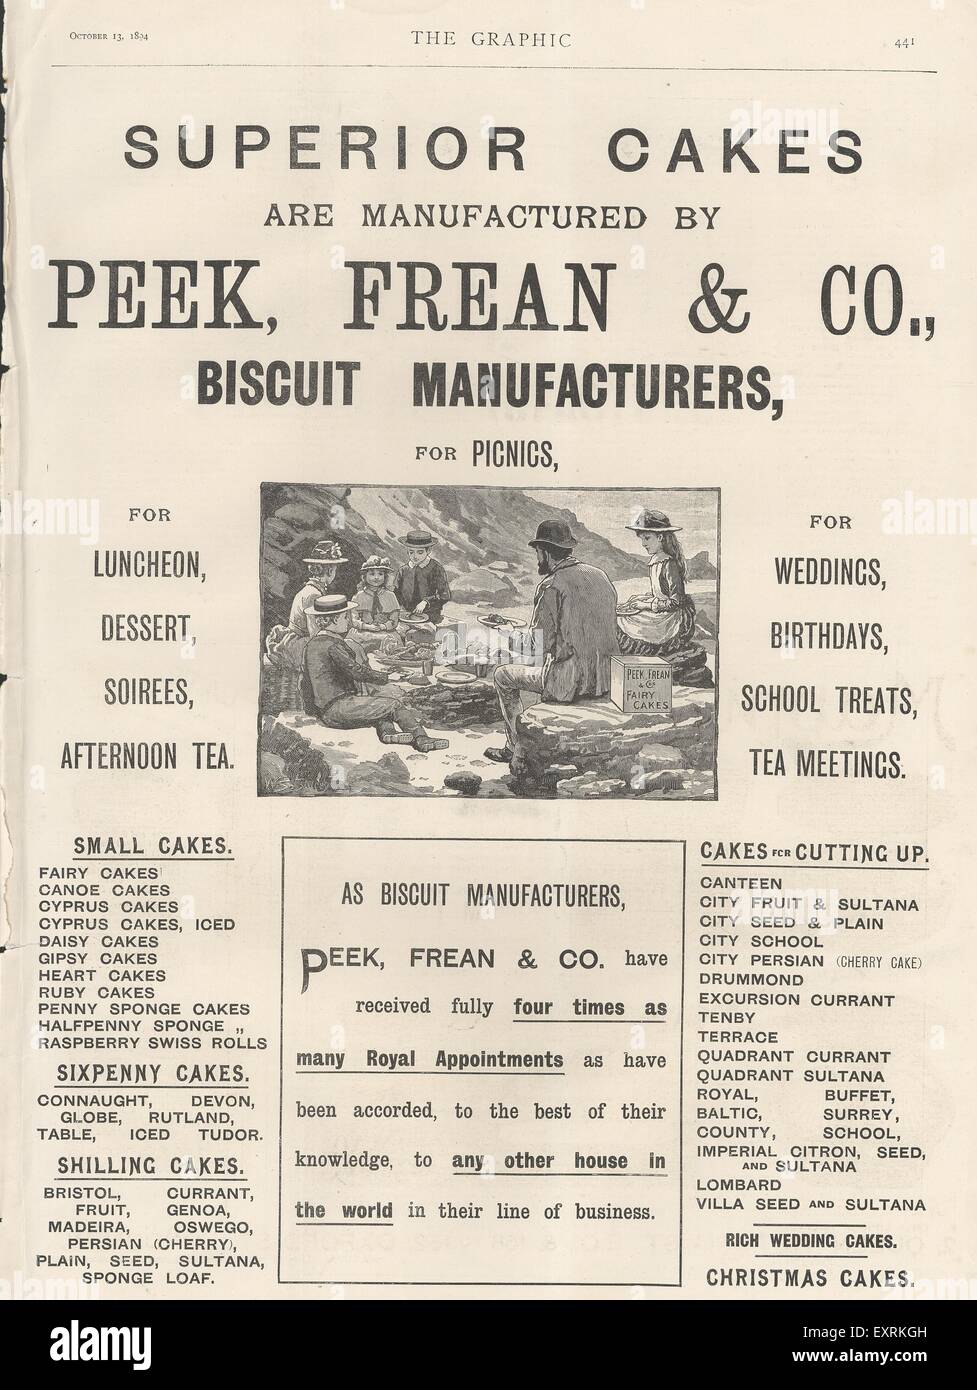 1890s UK Peek, Frean and Co Magazine Advert Stock Photo